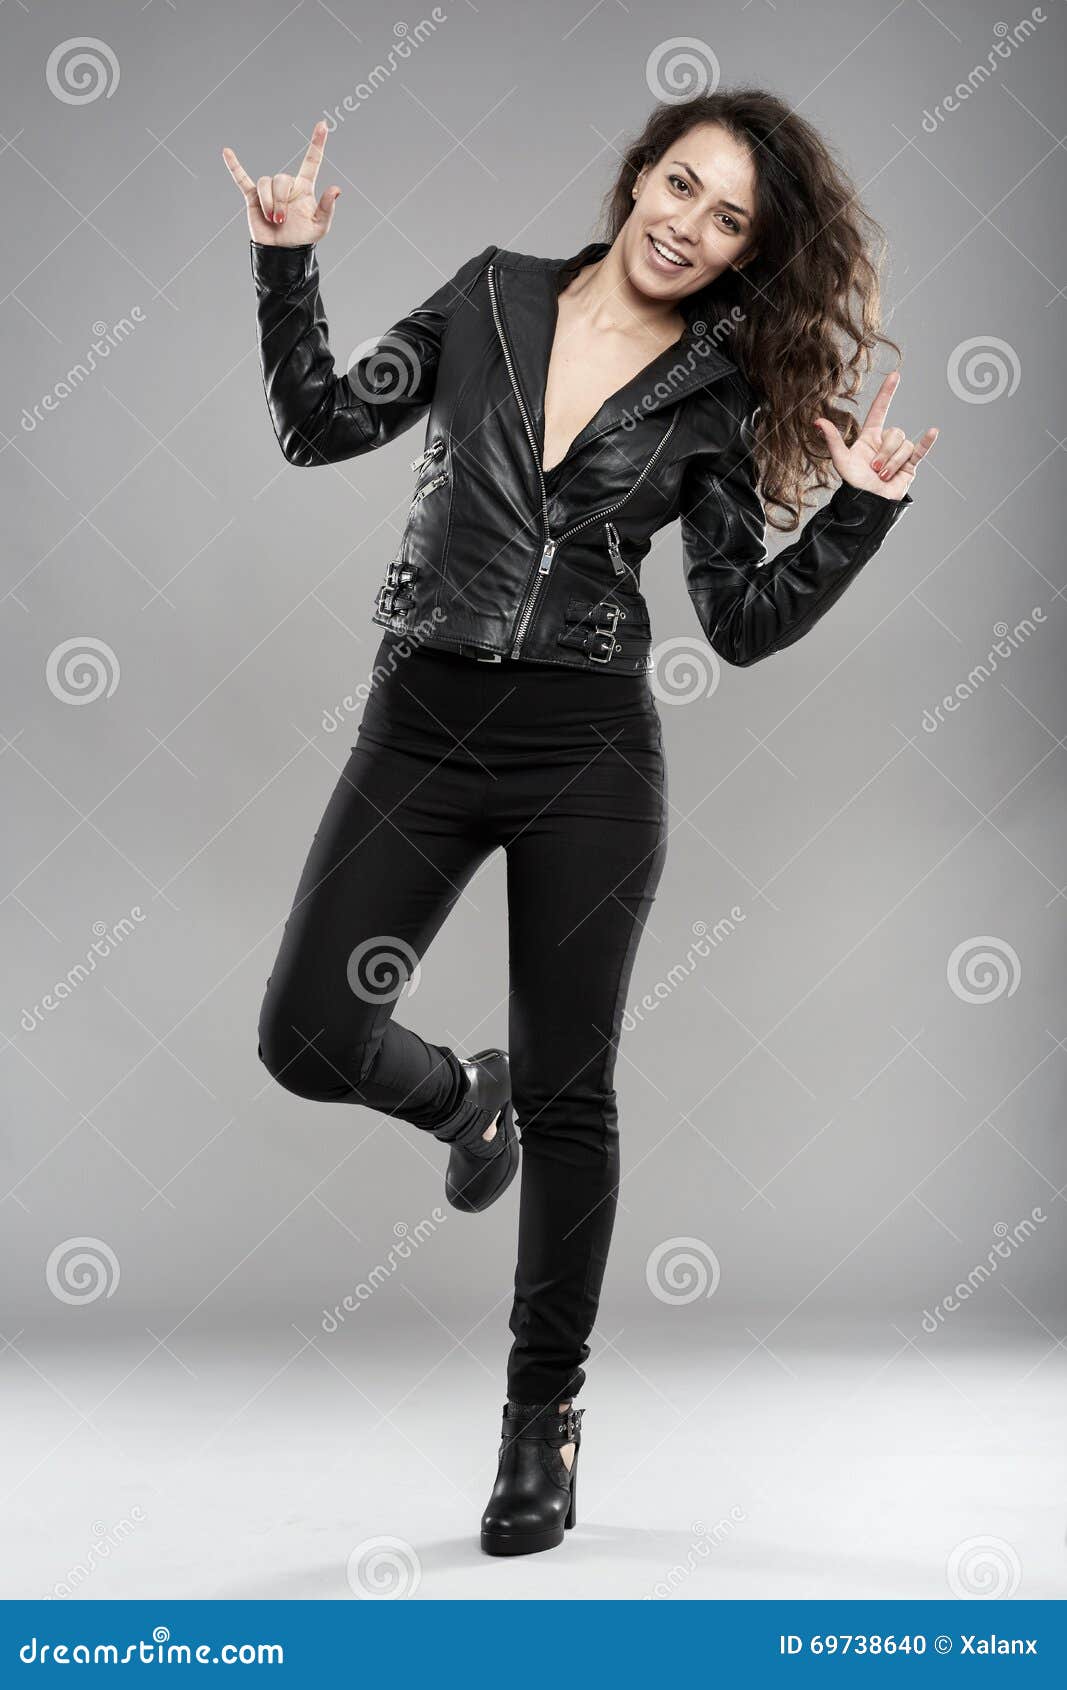 Rock chick stock photo. Image of jacket, rebel, black - 69738640